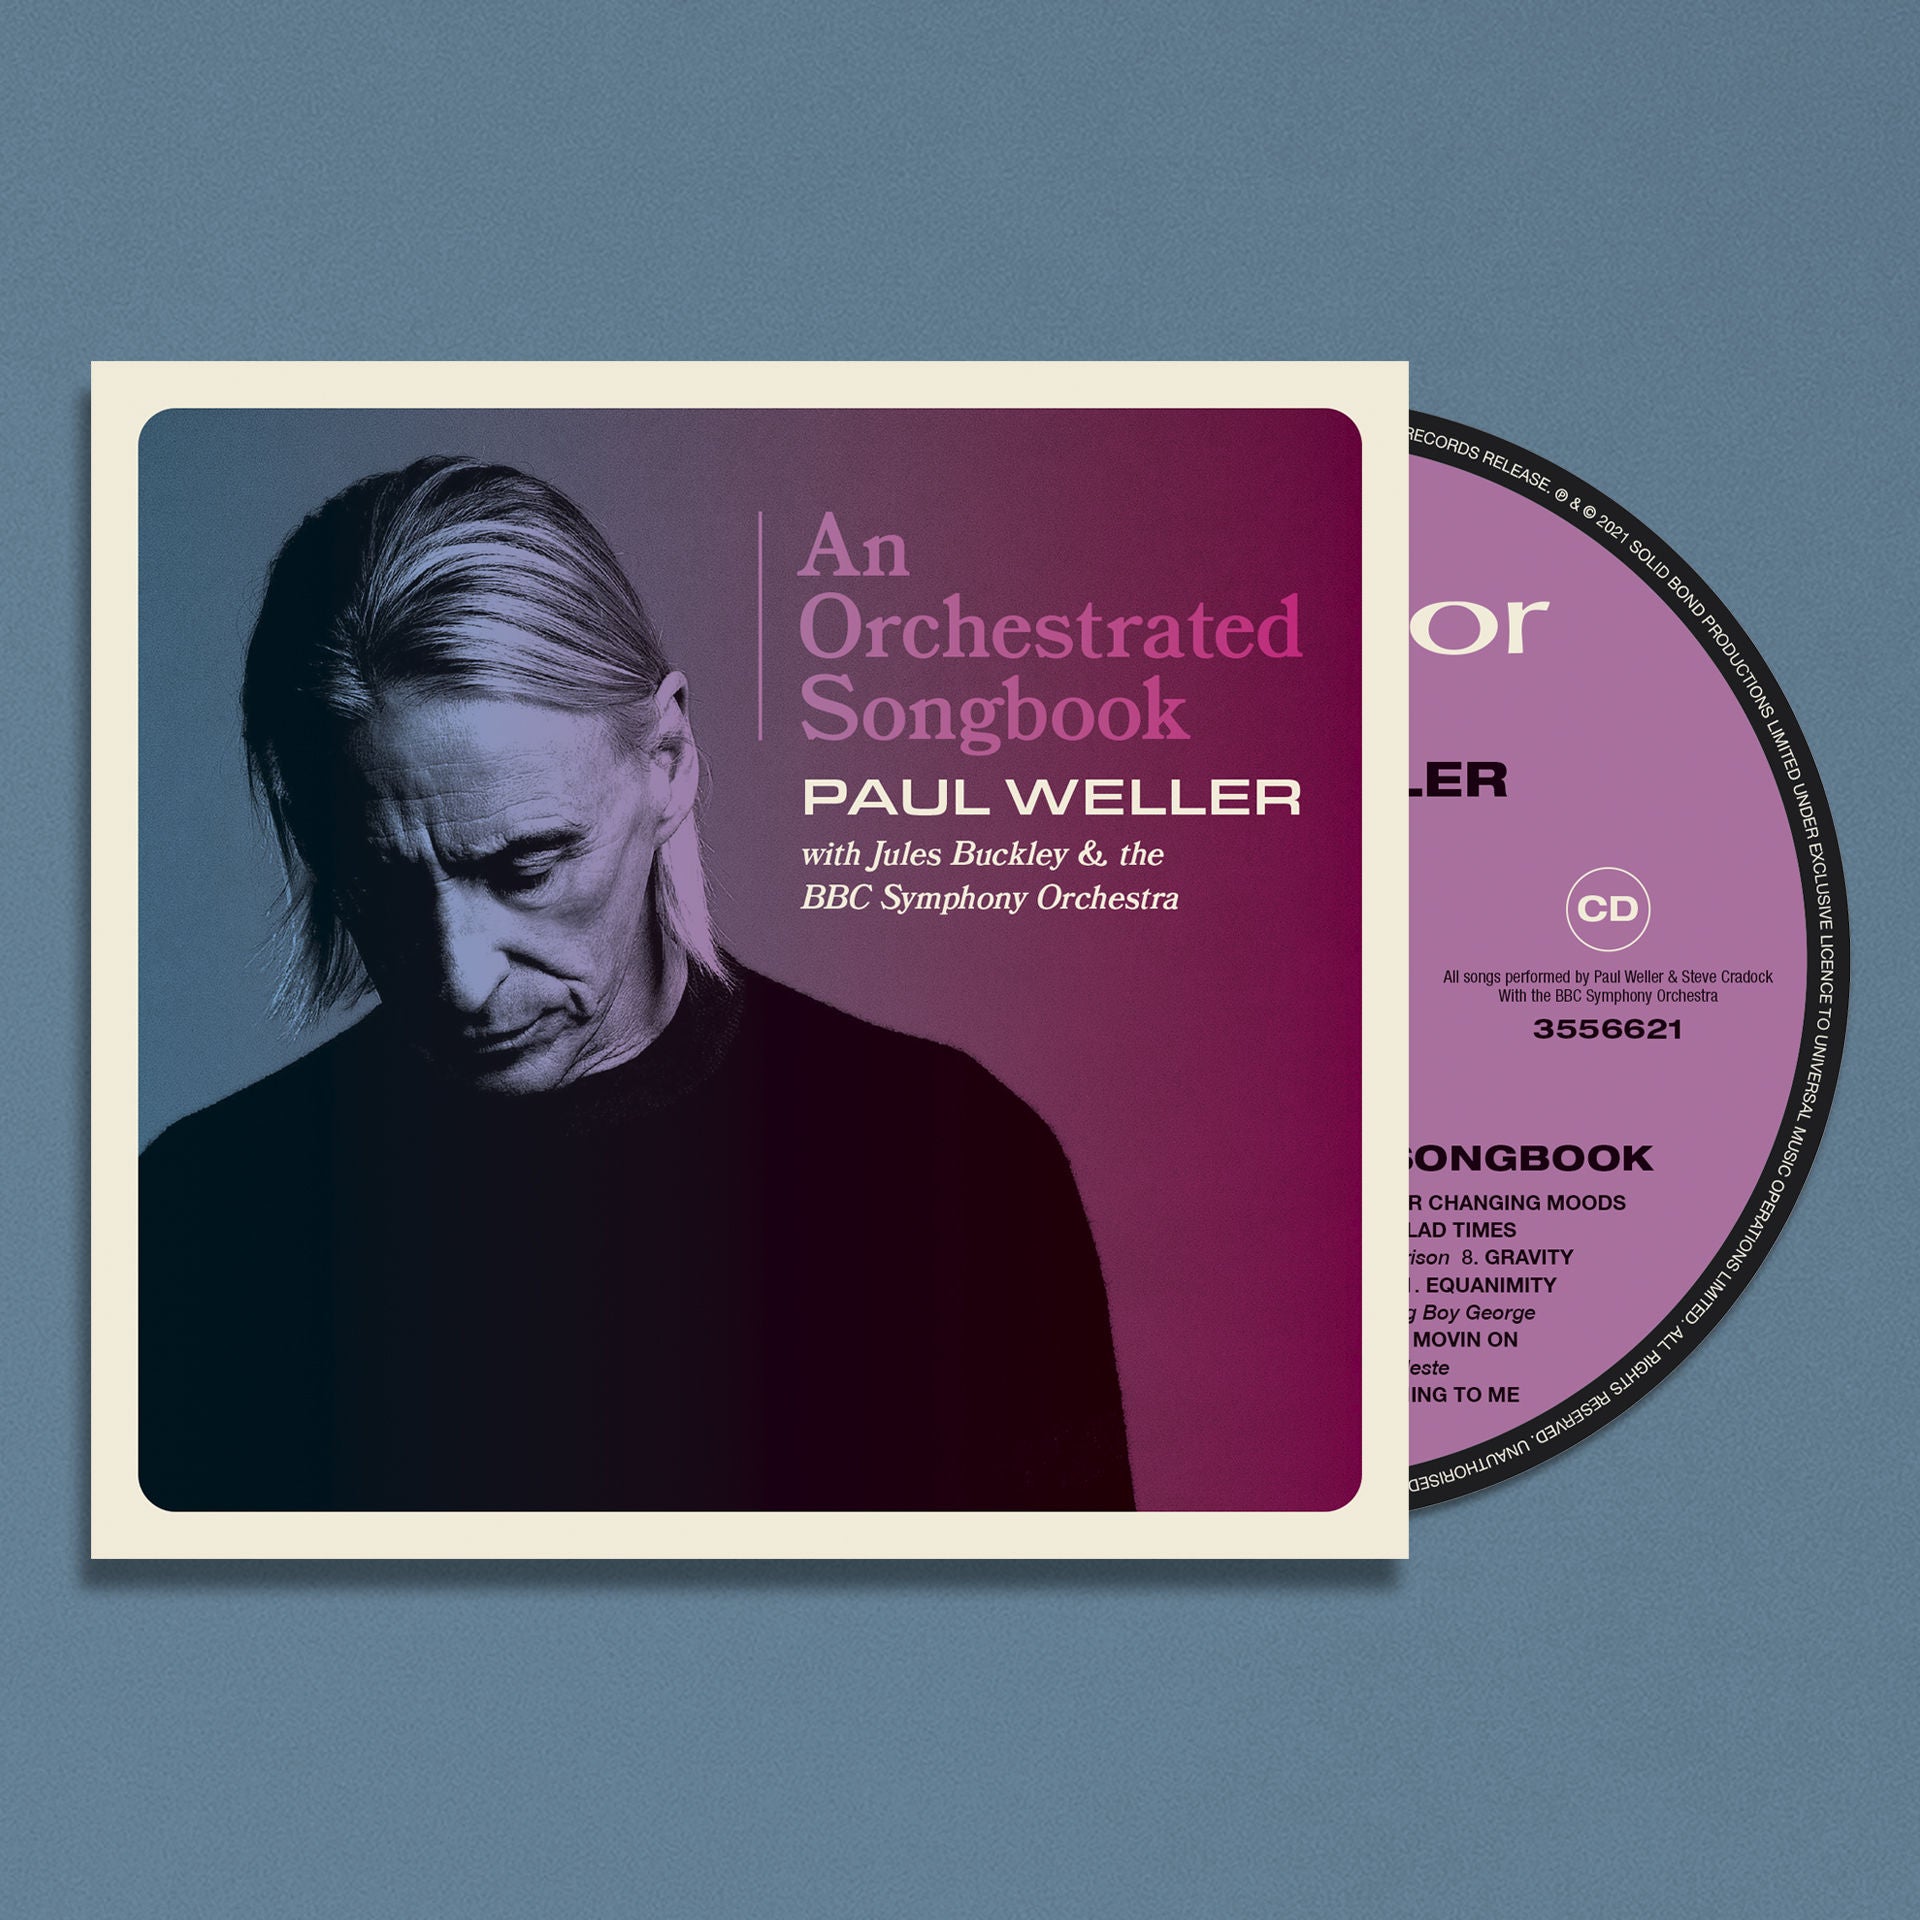 Bbc symphony orchestra. CD Weller, Paul: fat Pop. Orchestrated. "Jules Buckley" && ( исполнитель | группа | музыка | Music | Band | artist ) && (фото | photo). LP Weller, Paul: Sonik Kicks.